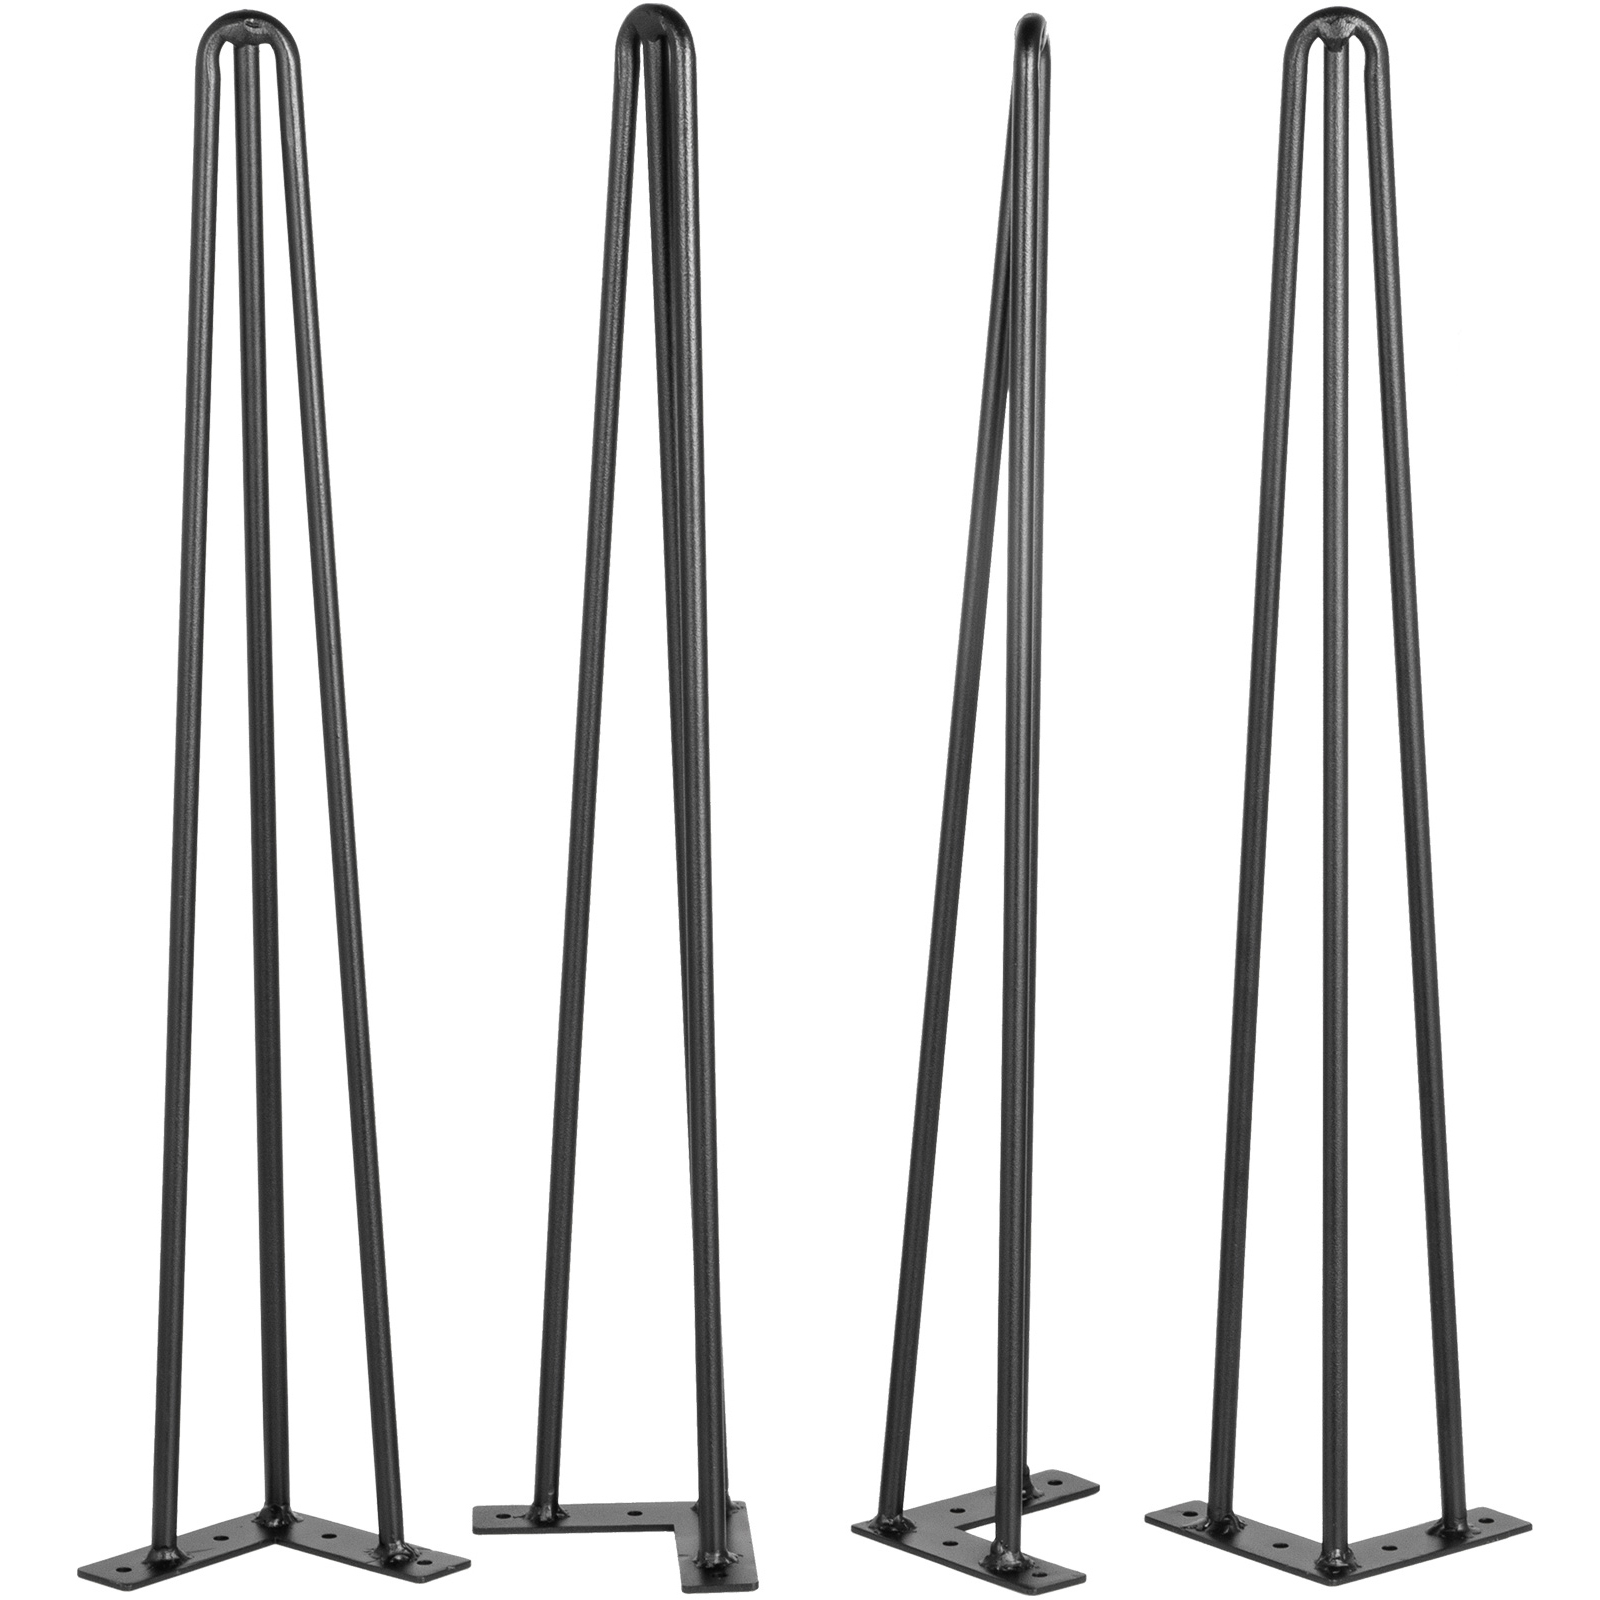 VEVOR Hairpin Table Legs 16 inch, Set of 4 DIY Desk Table Legs 3 Rods Heavy Duty от Vevor Many GEOs